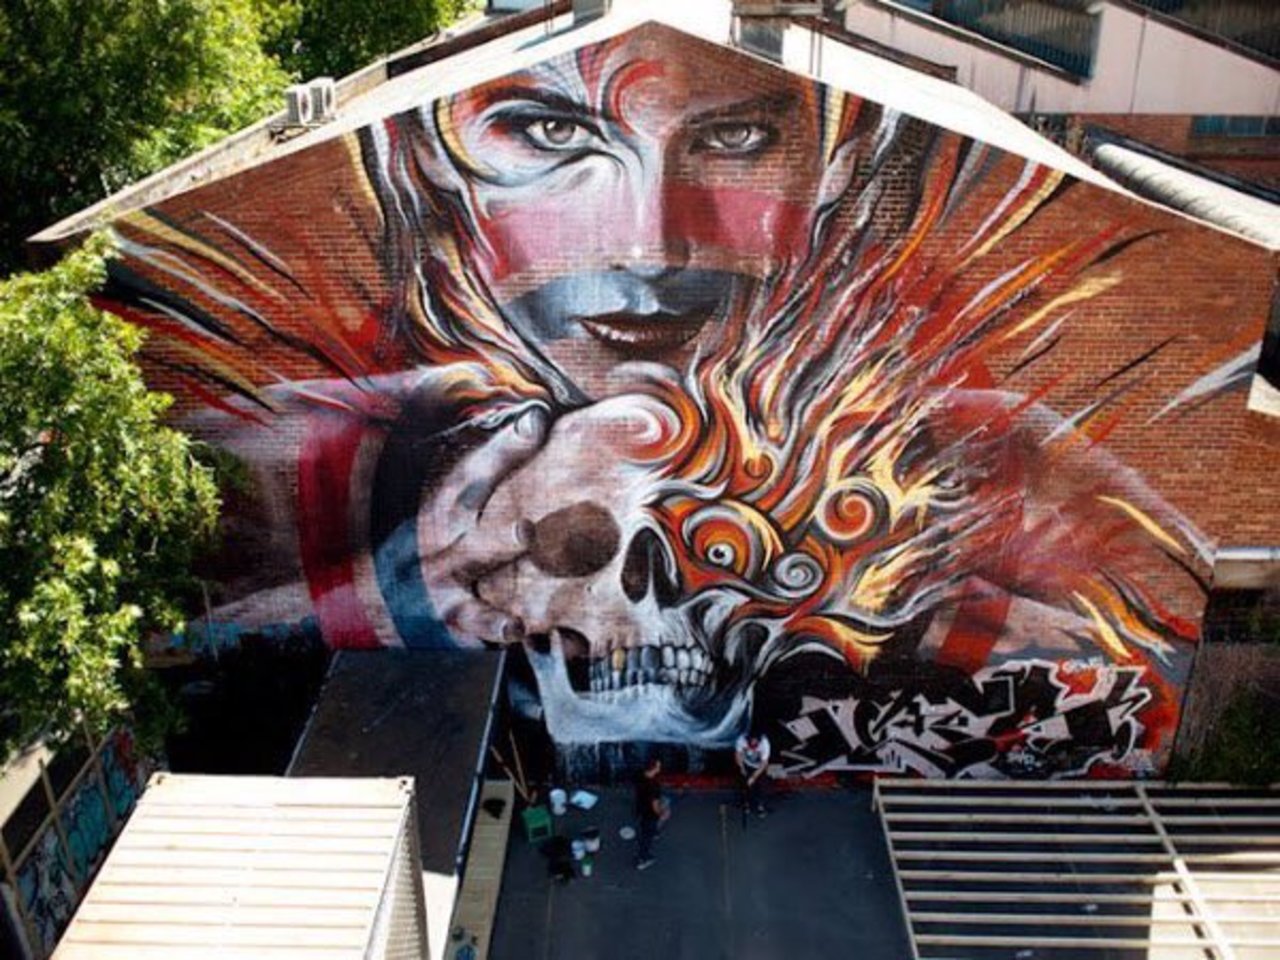 #Mural by Rone #Melbourne #Australia #Streetart #urbanart #graffiti #art https://t.co/SxatUkNAAc